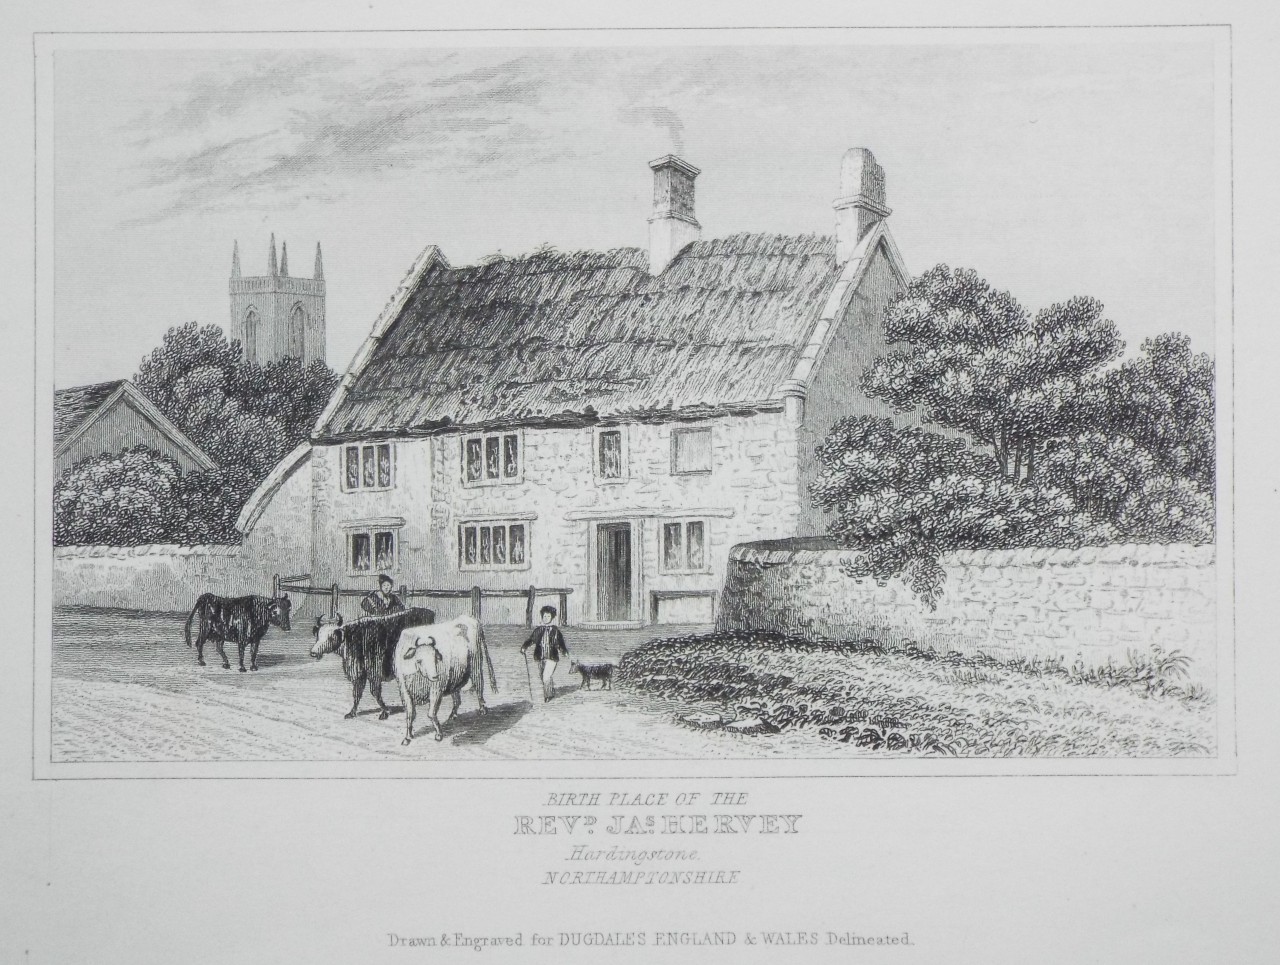 Print - Birth Place of the Revd. Jas. Hervey Hardingstone, Northamptonshire.